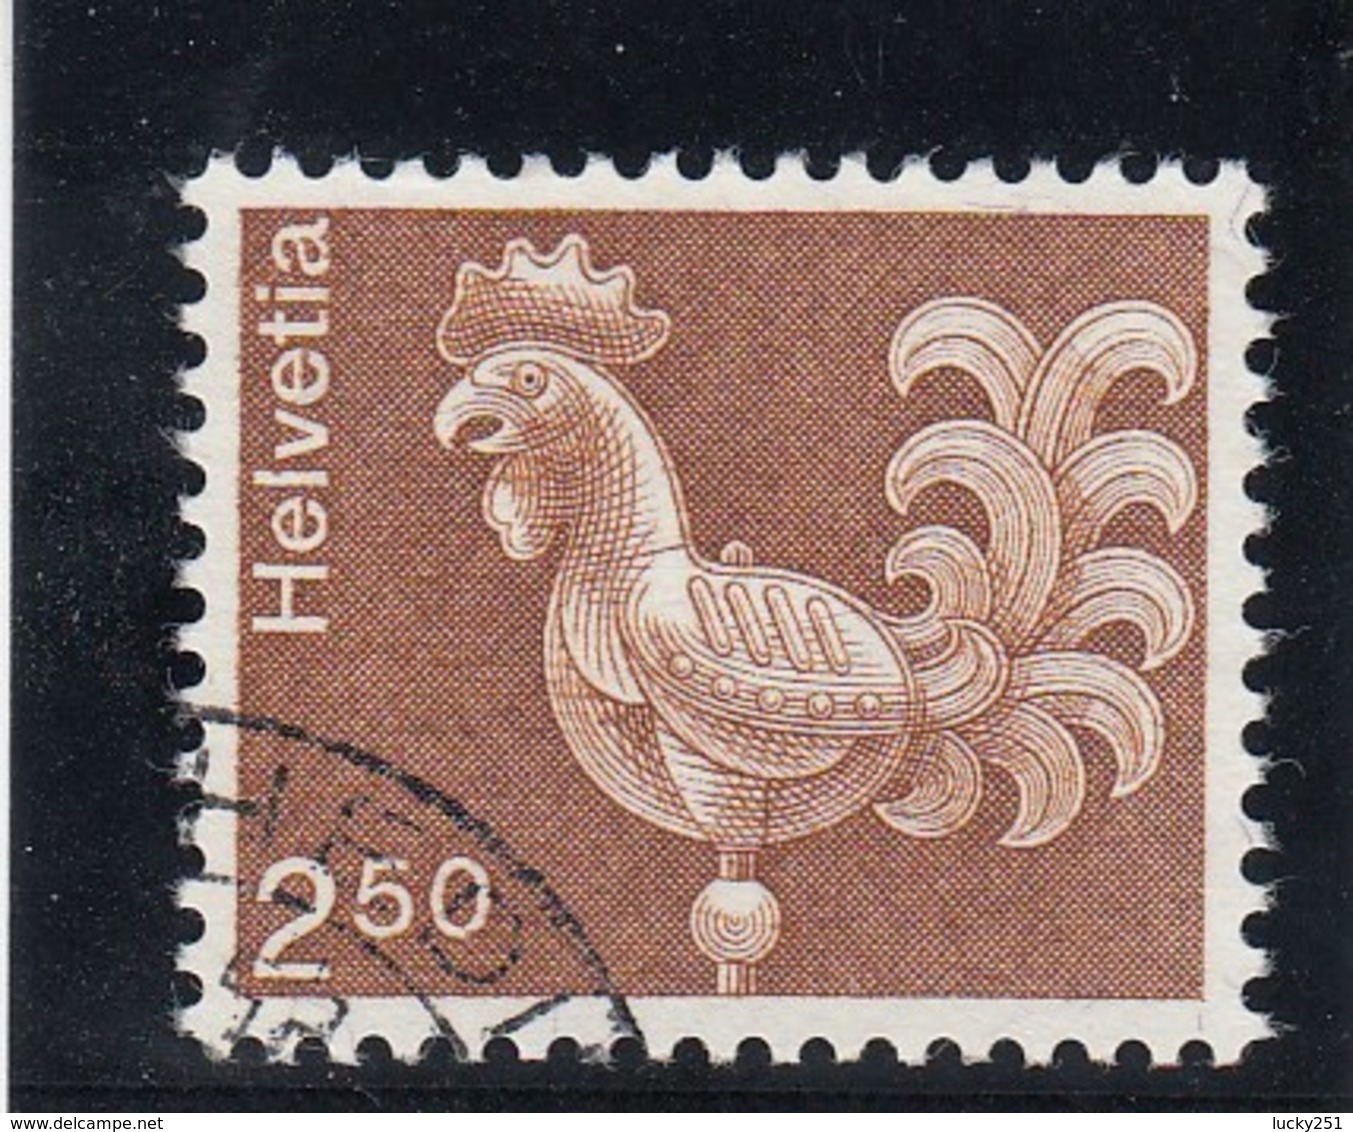 Suisse - 1975 - Oblit. - N° YT 991 - Coq - Gebraucht